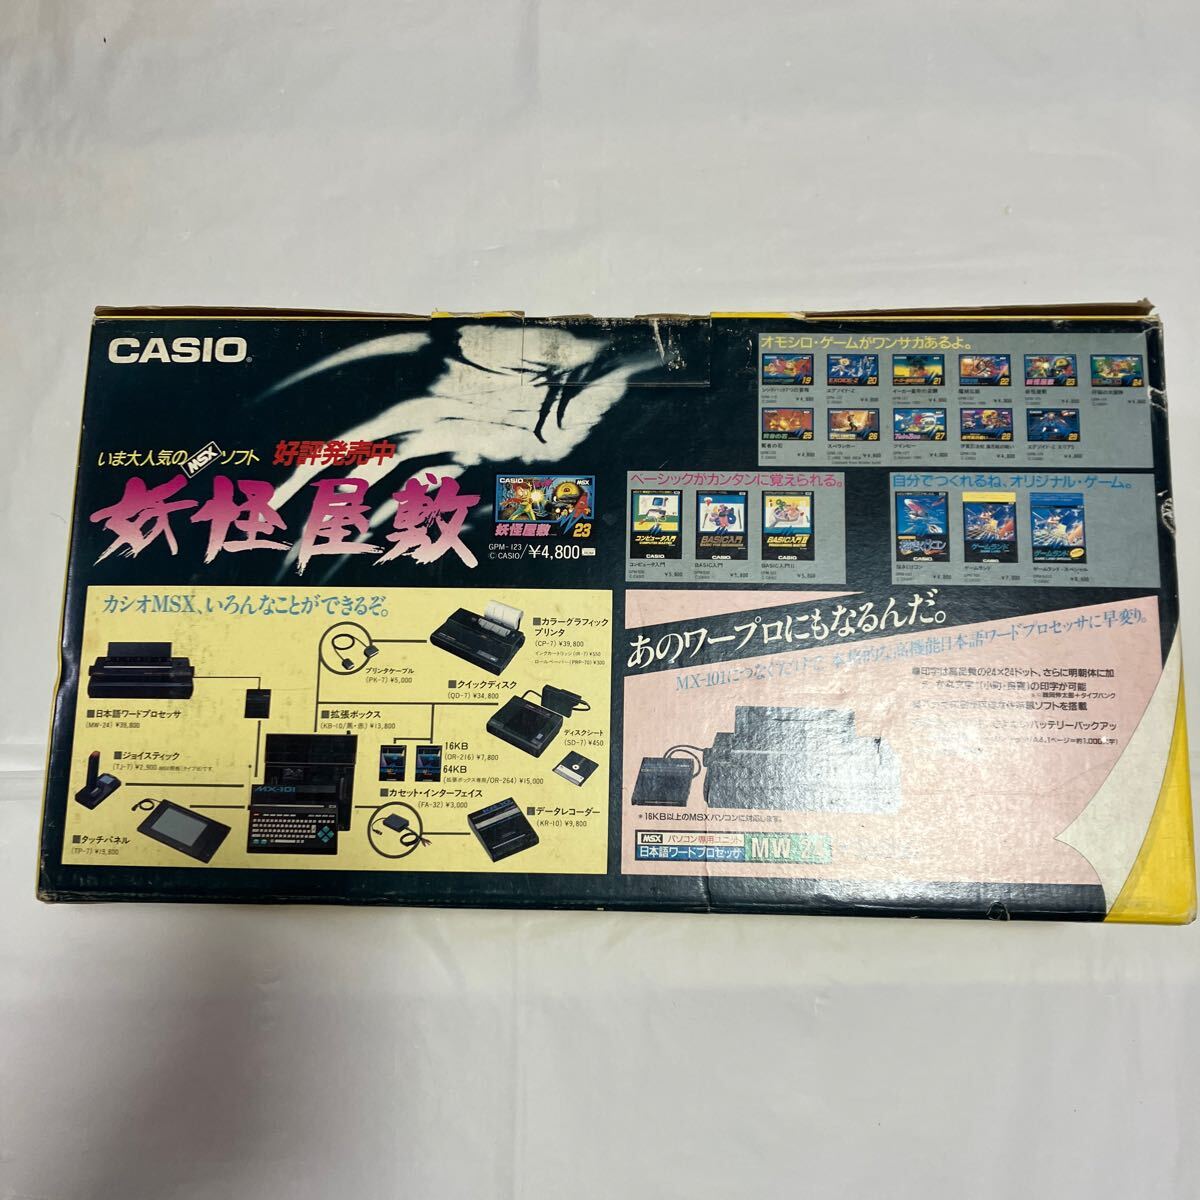 CASIO MSX MX-101 Junk 